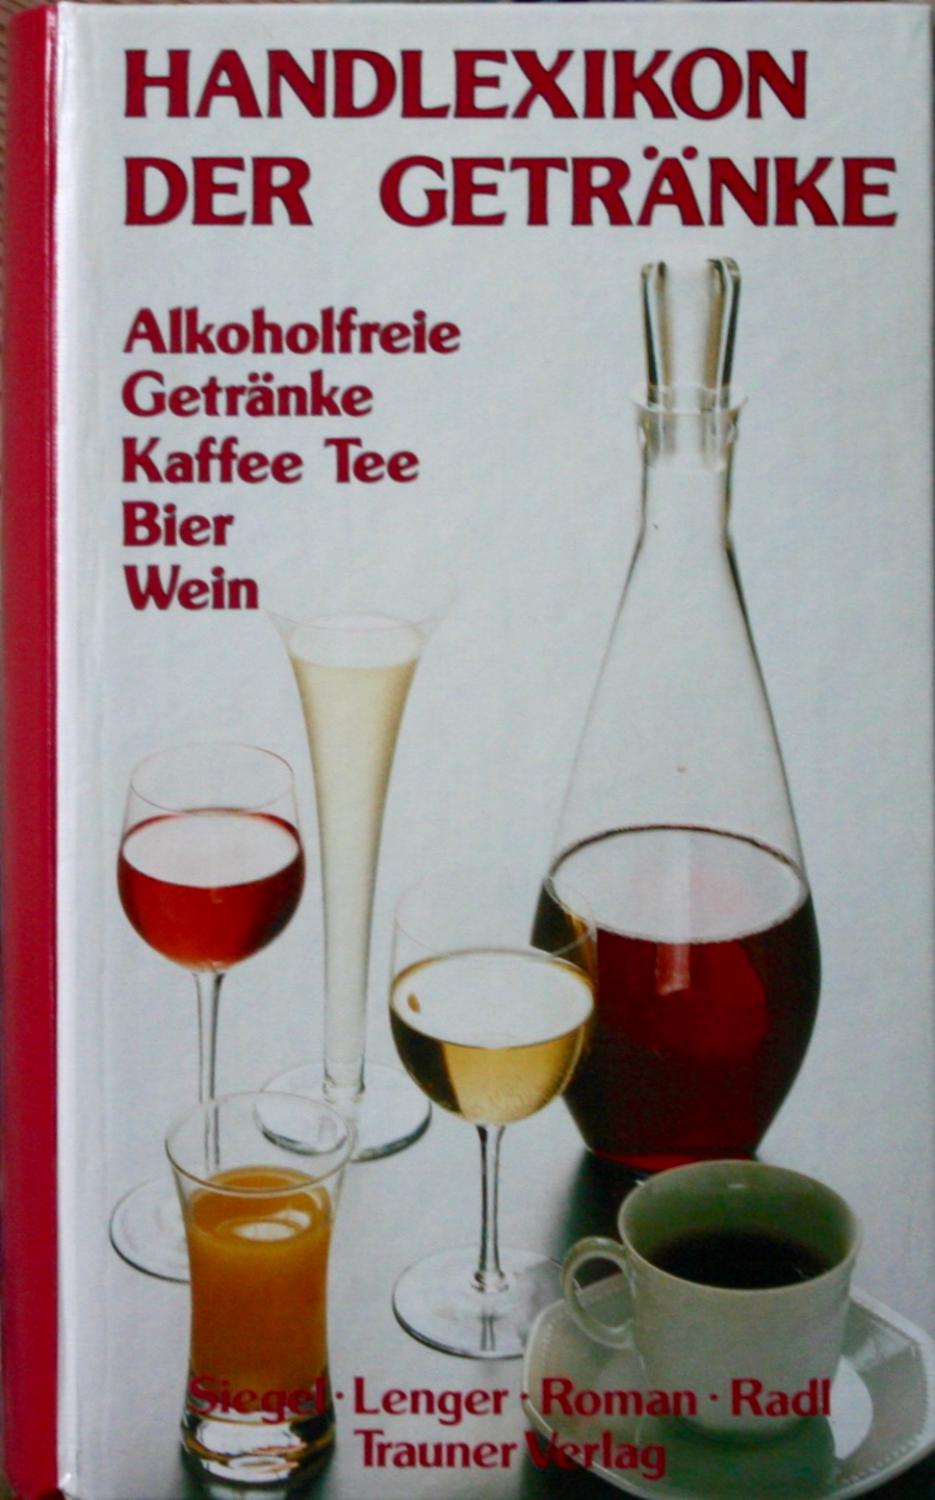 Handlexikon der Getränke 2 - Alkoholfreie Getränke, Kaffee, Tee, Bier, Wein